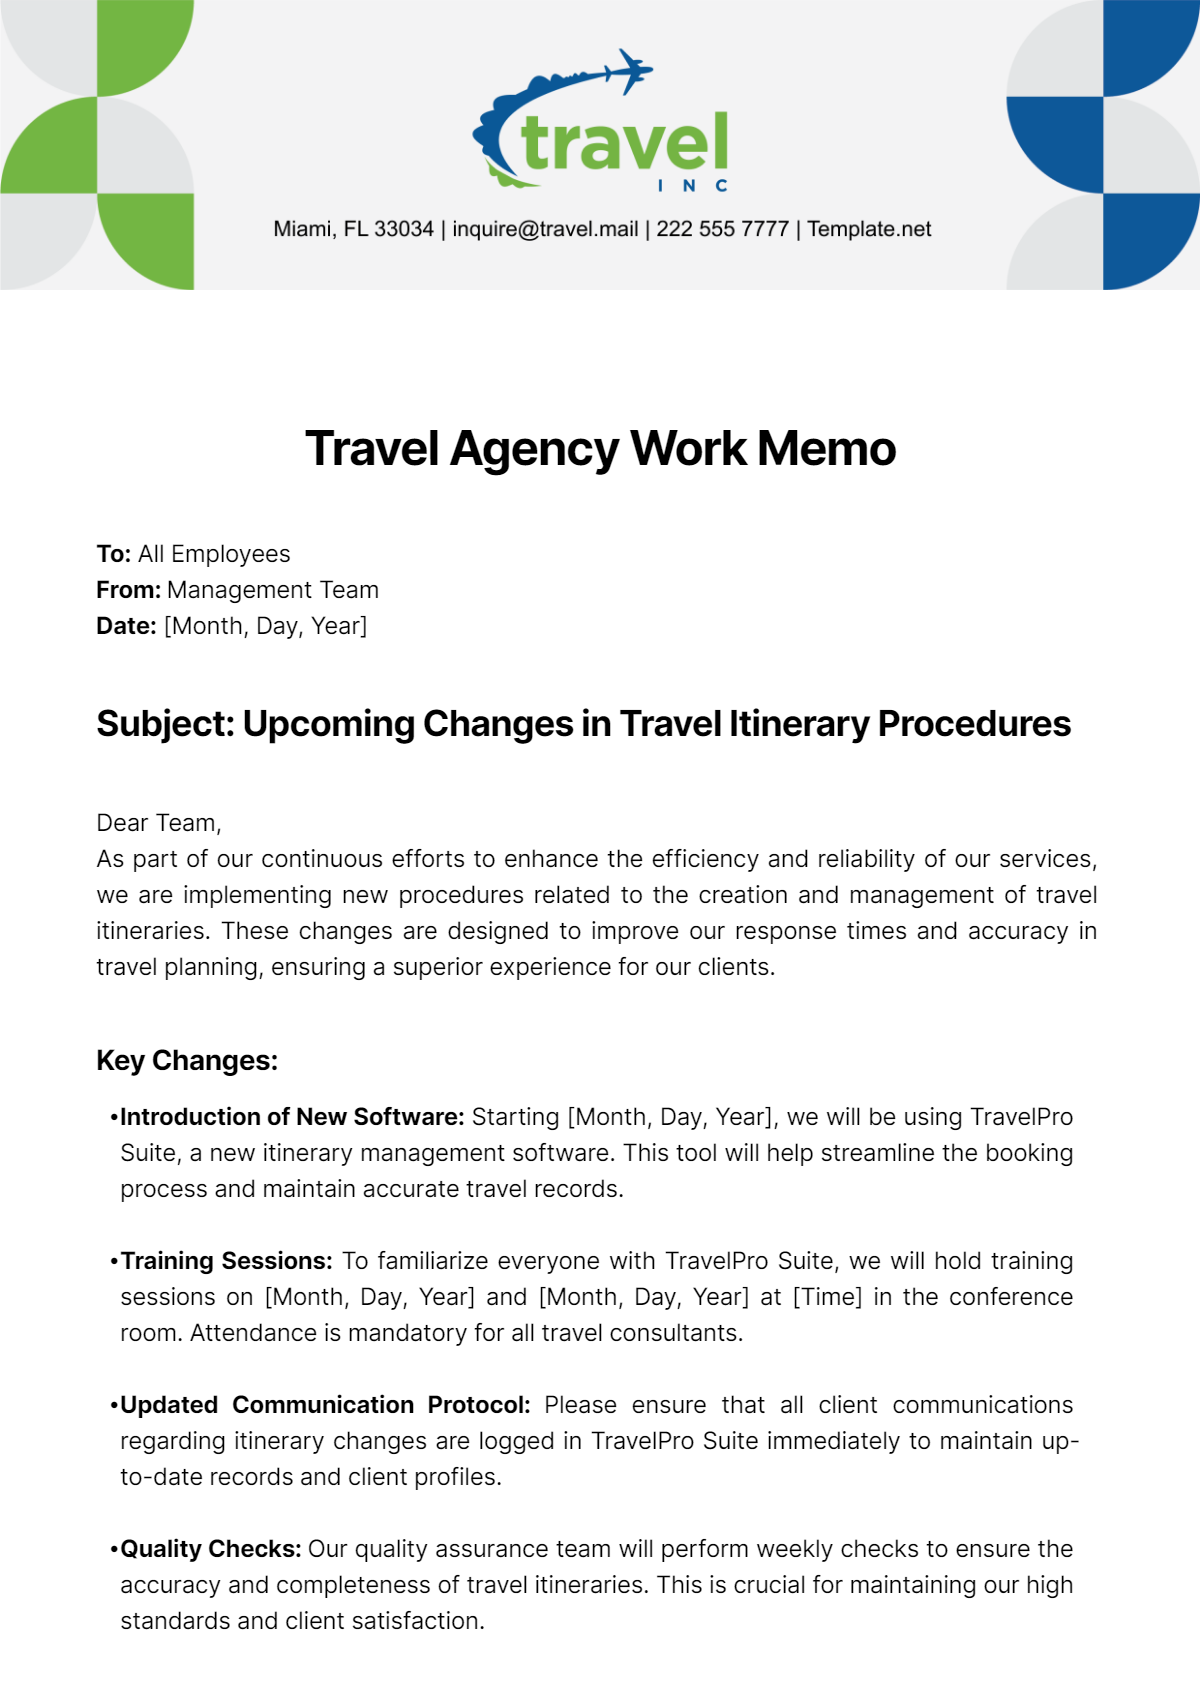 Travel Agency Work Memo Template